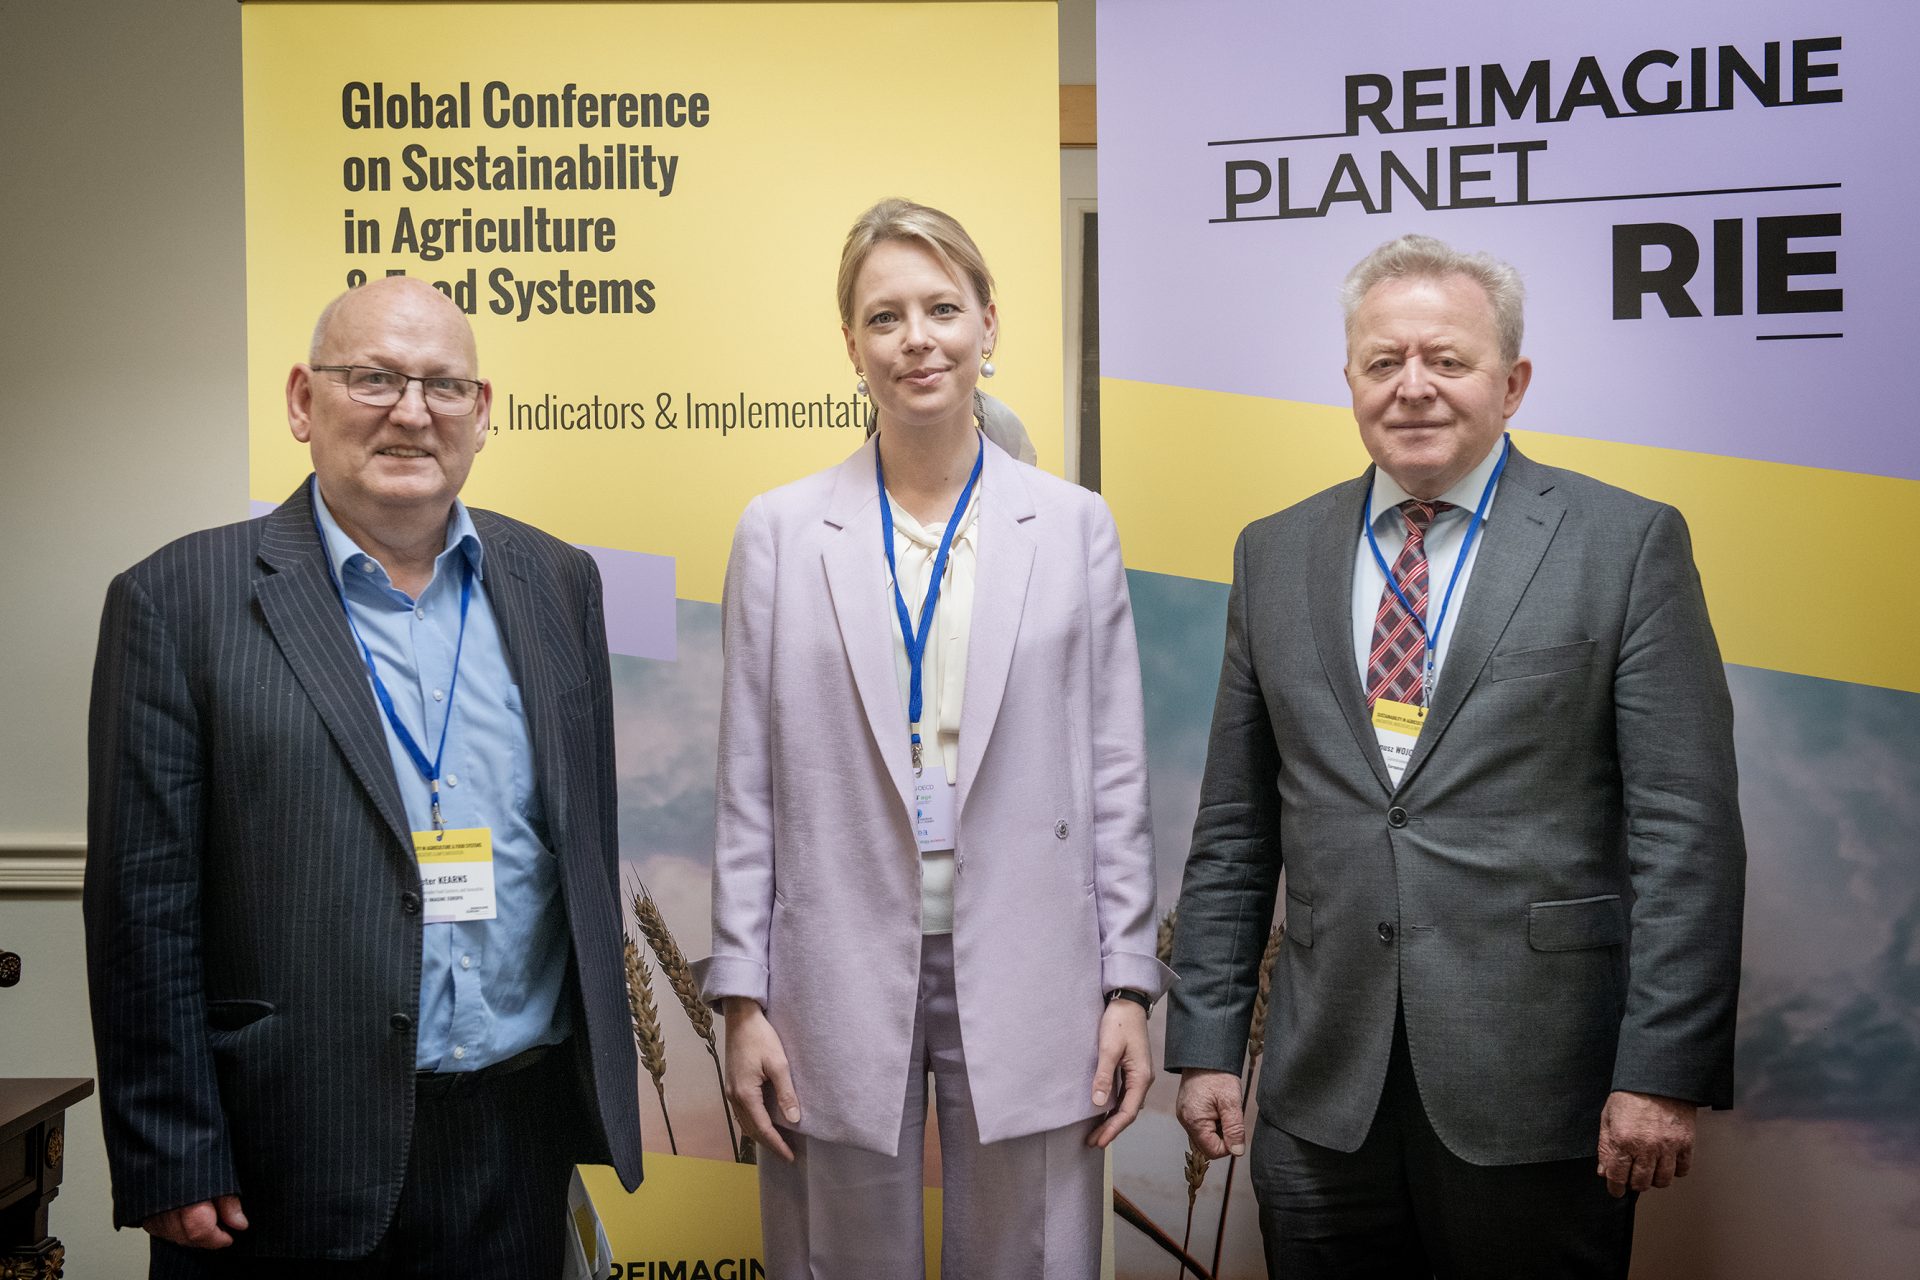 Dr Peter Kearns, Erika Staël von Holstein and the European Commissioner Janusz Wojciechowski posing for a photography